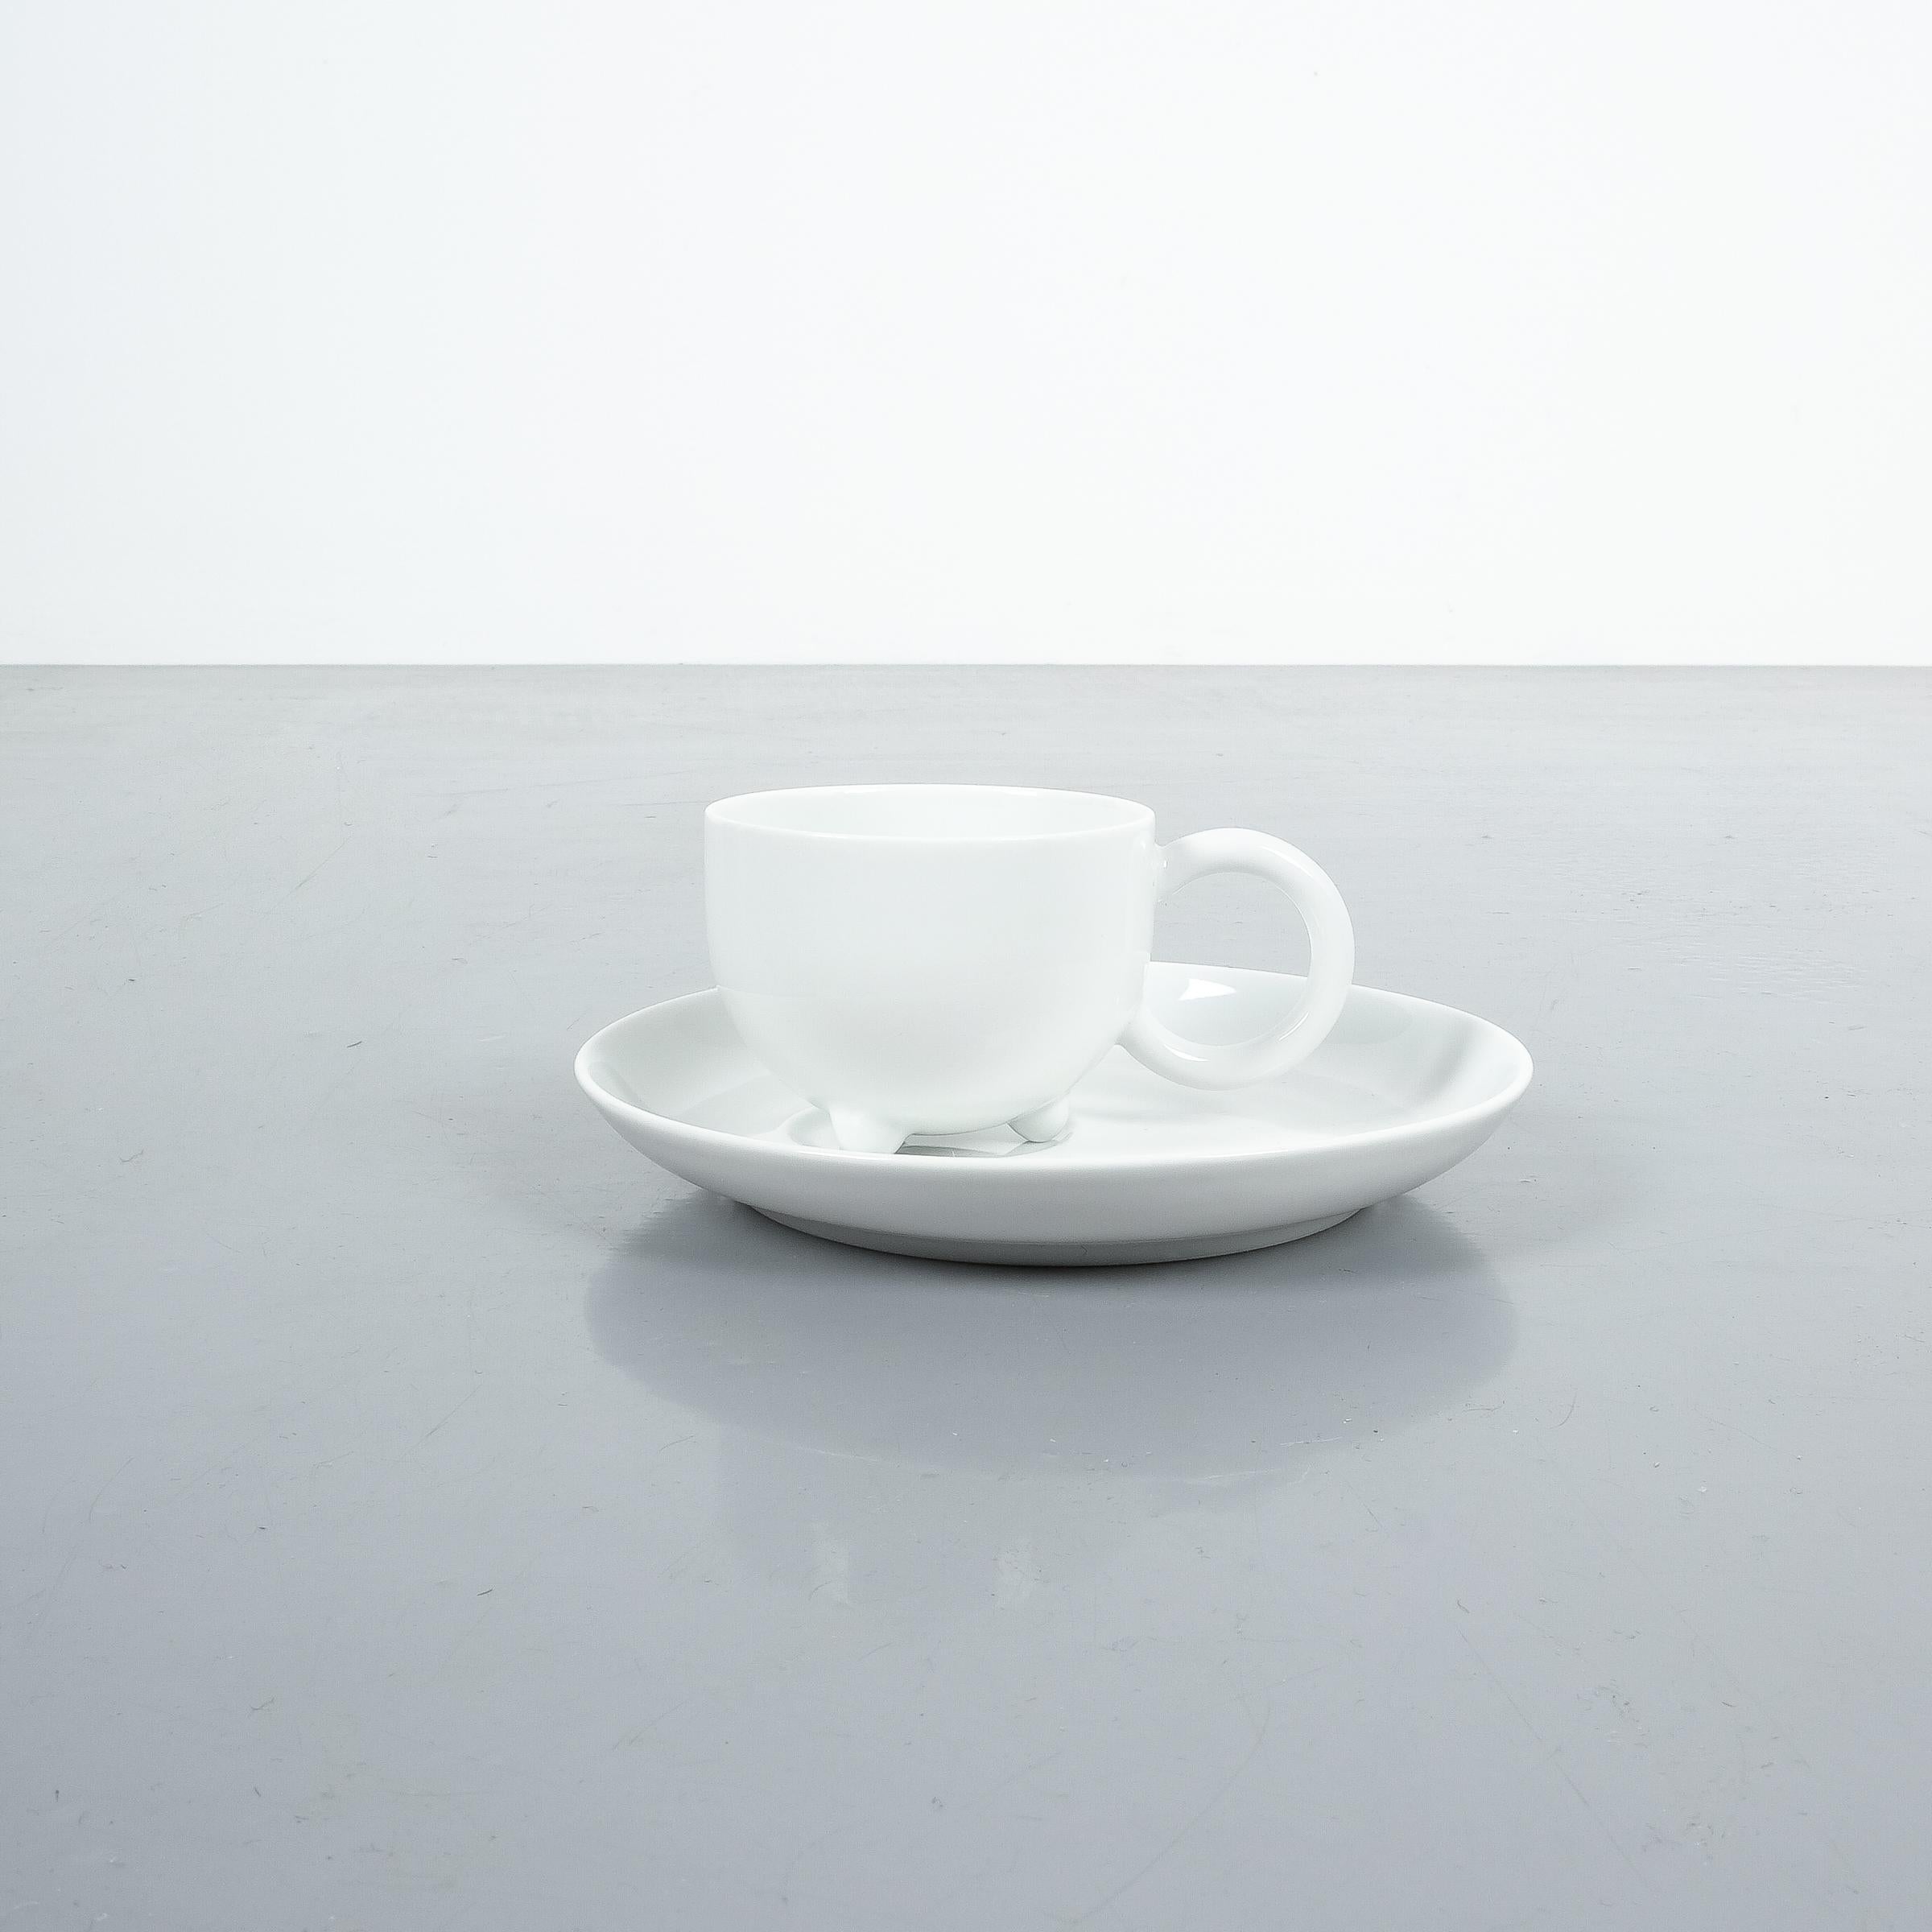 Matteo Thun Fantasia Mocca or Tea Set Porcelain for Arzberg, 1980s For Sale 1